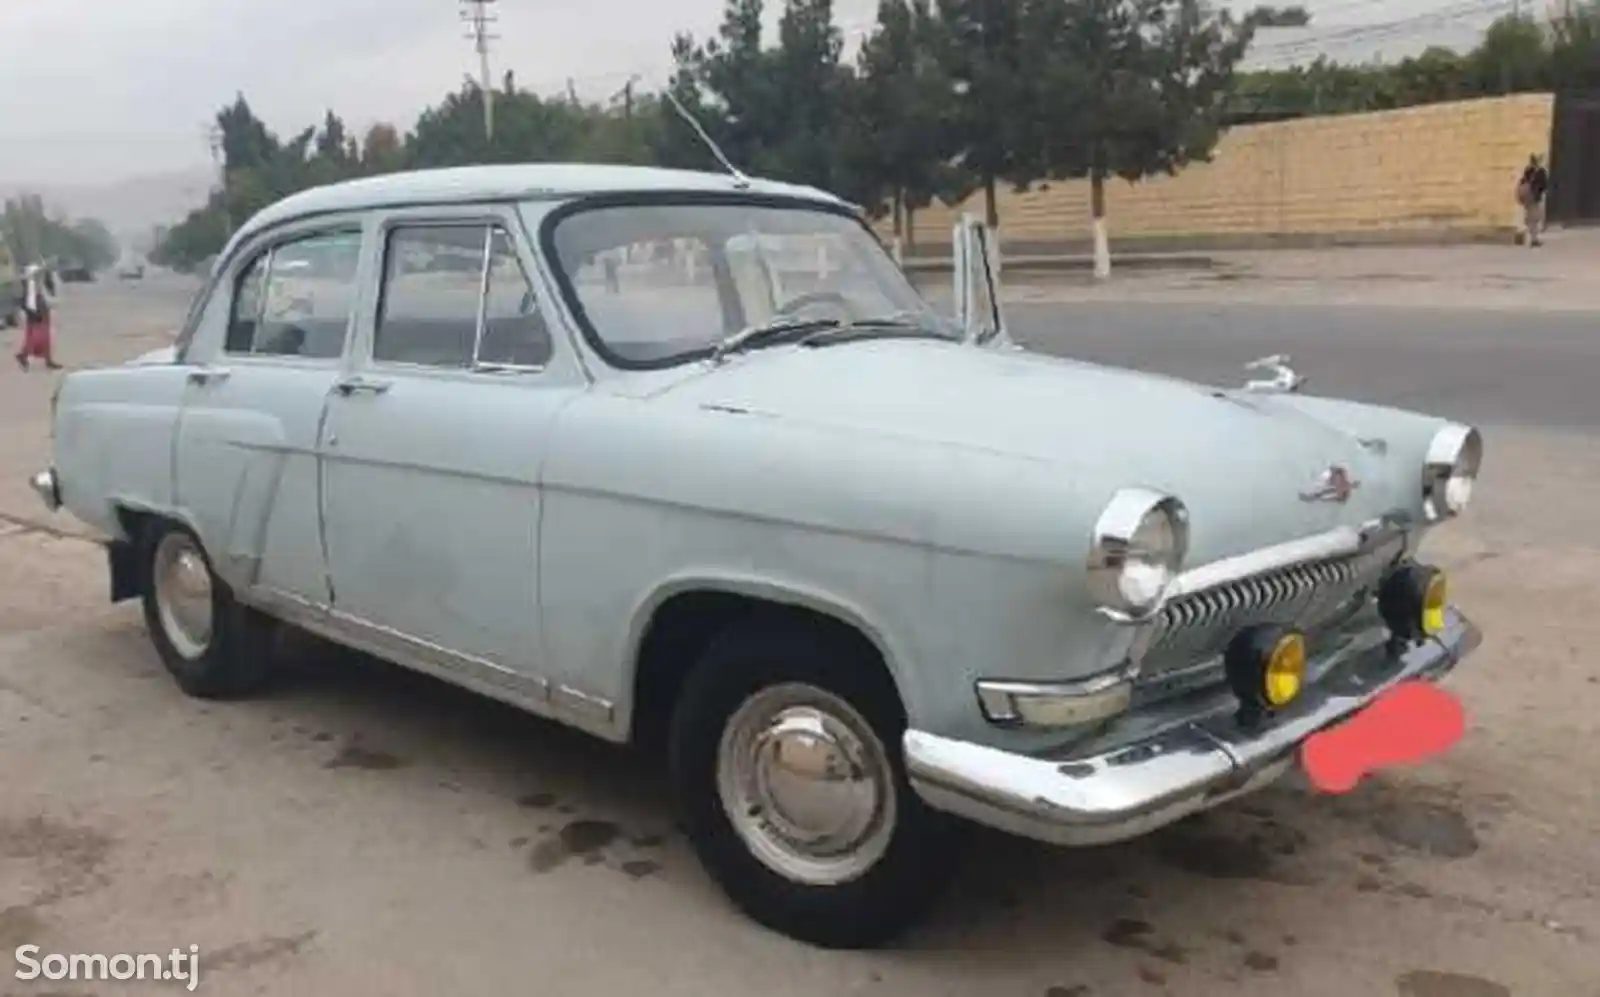 ГАЗ 21, 1960-1